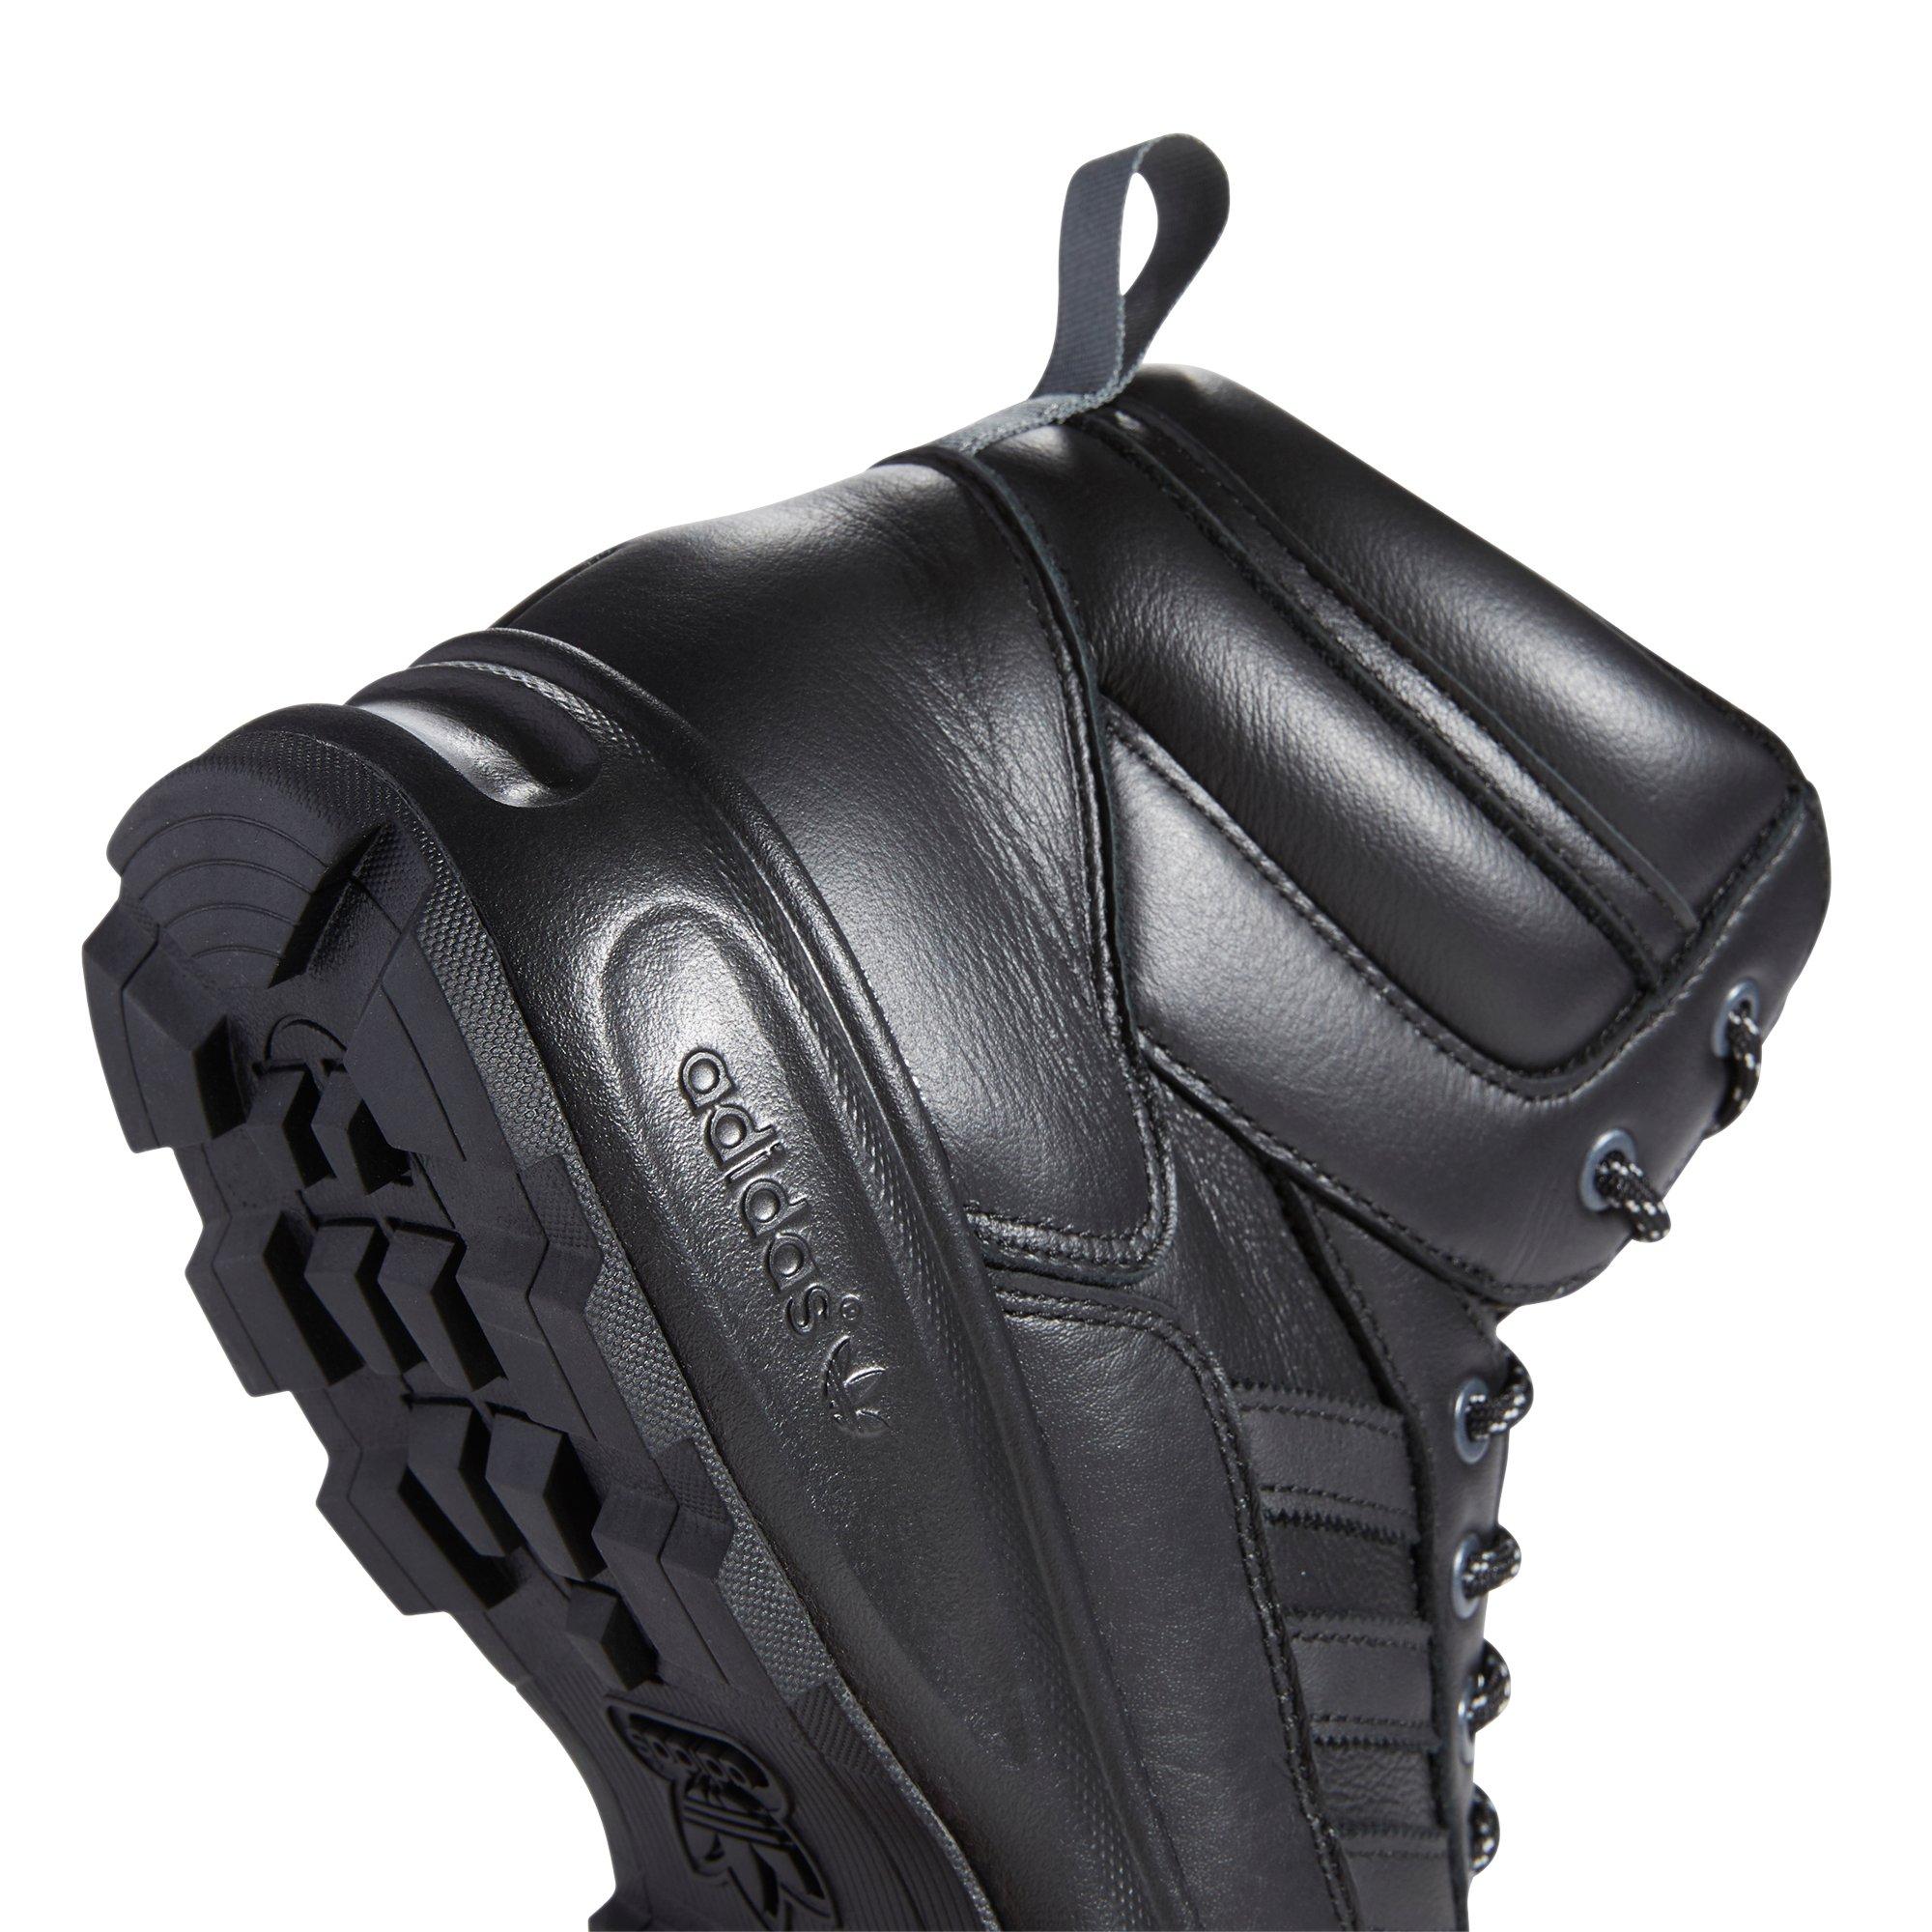 adidas Chasker Men's Boot